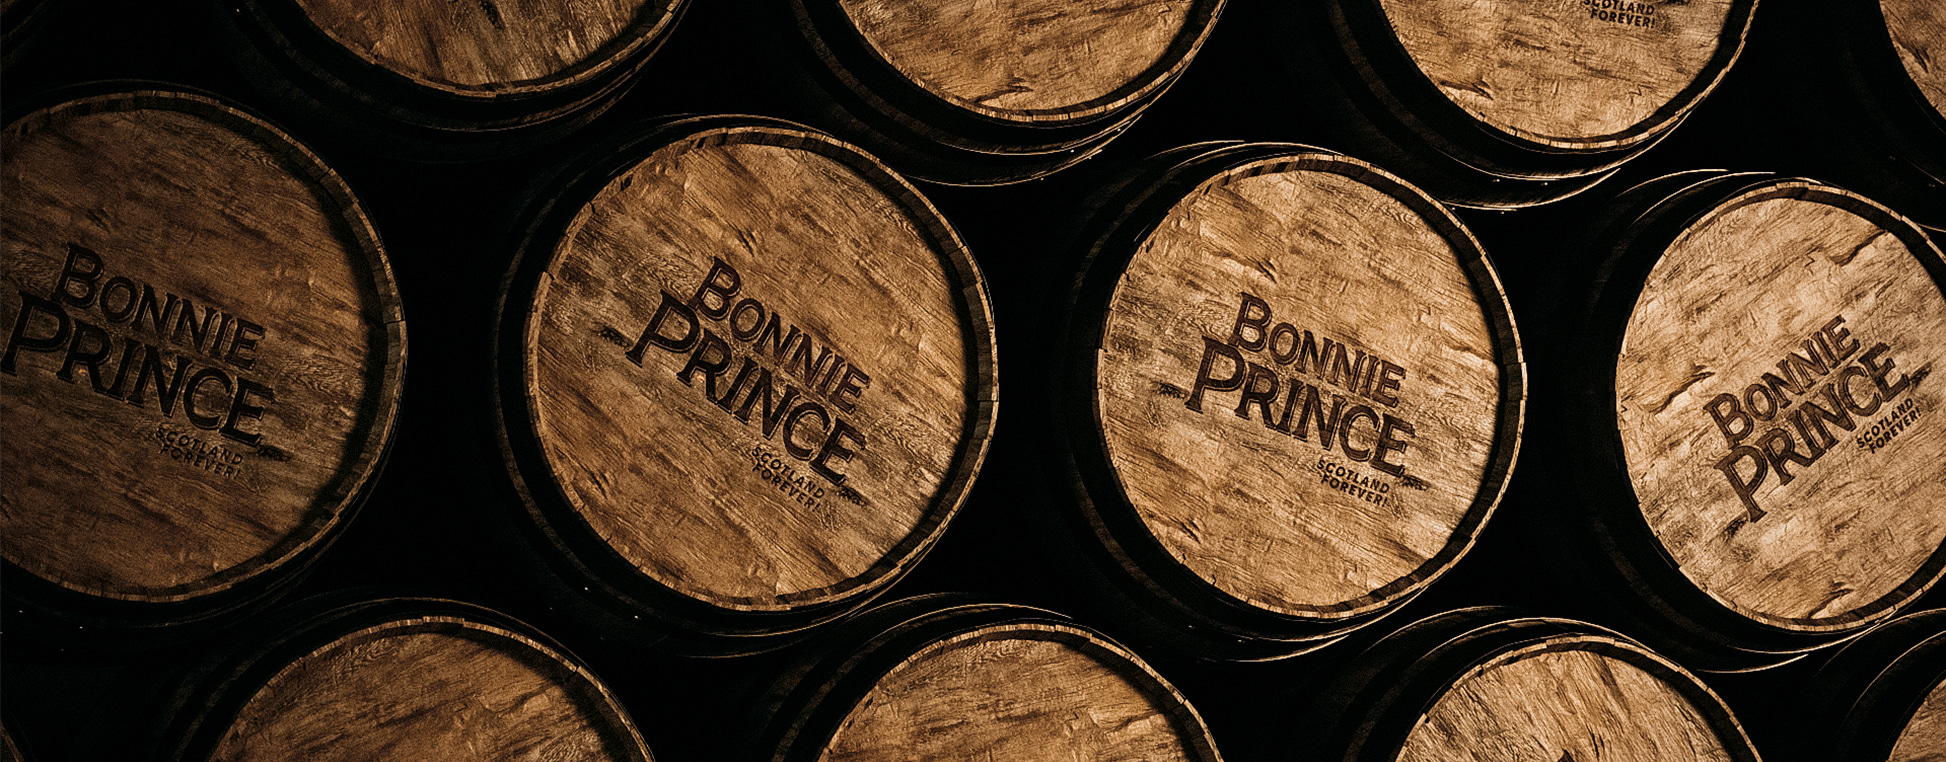 Bonnie Prince whisky image